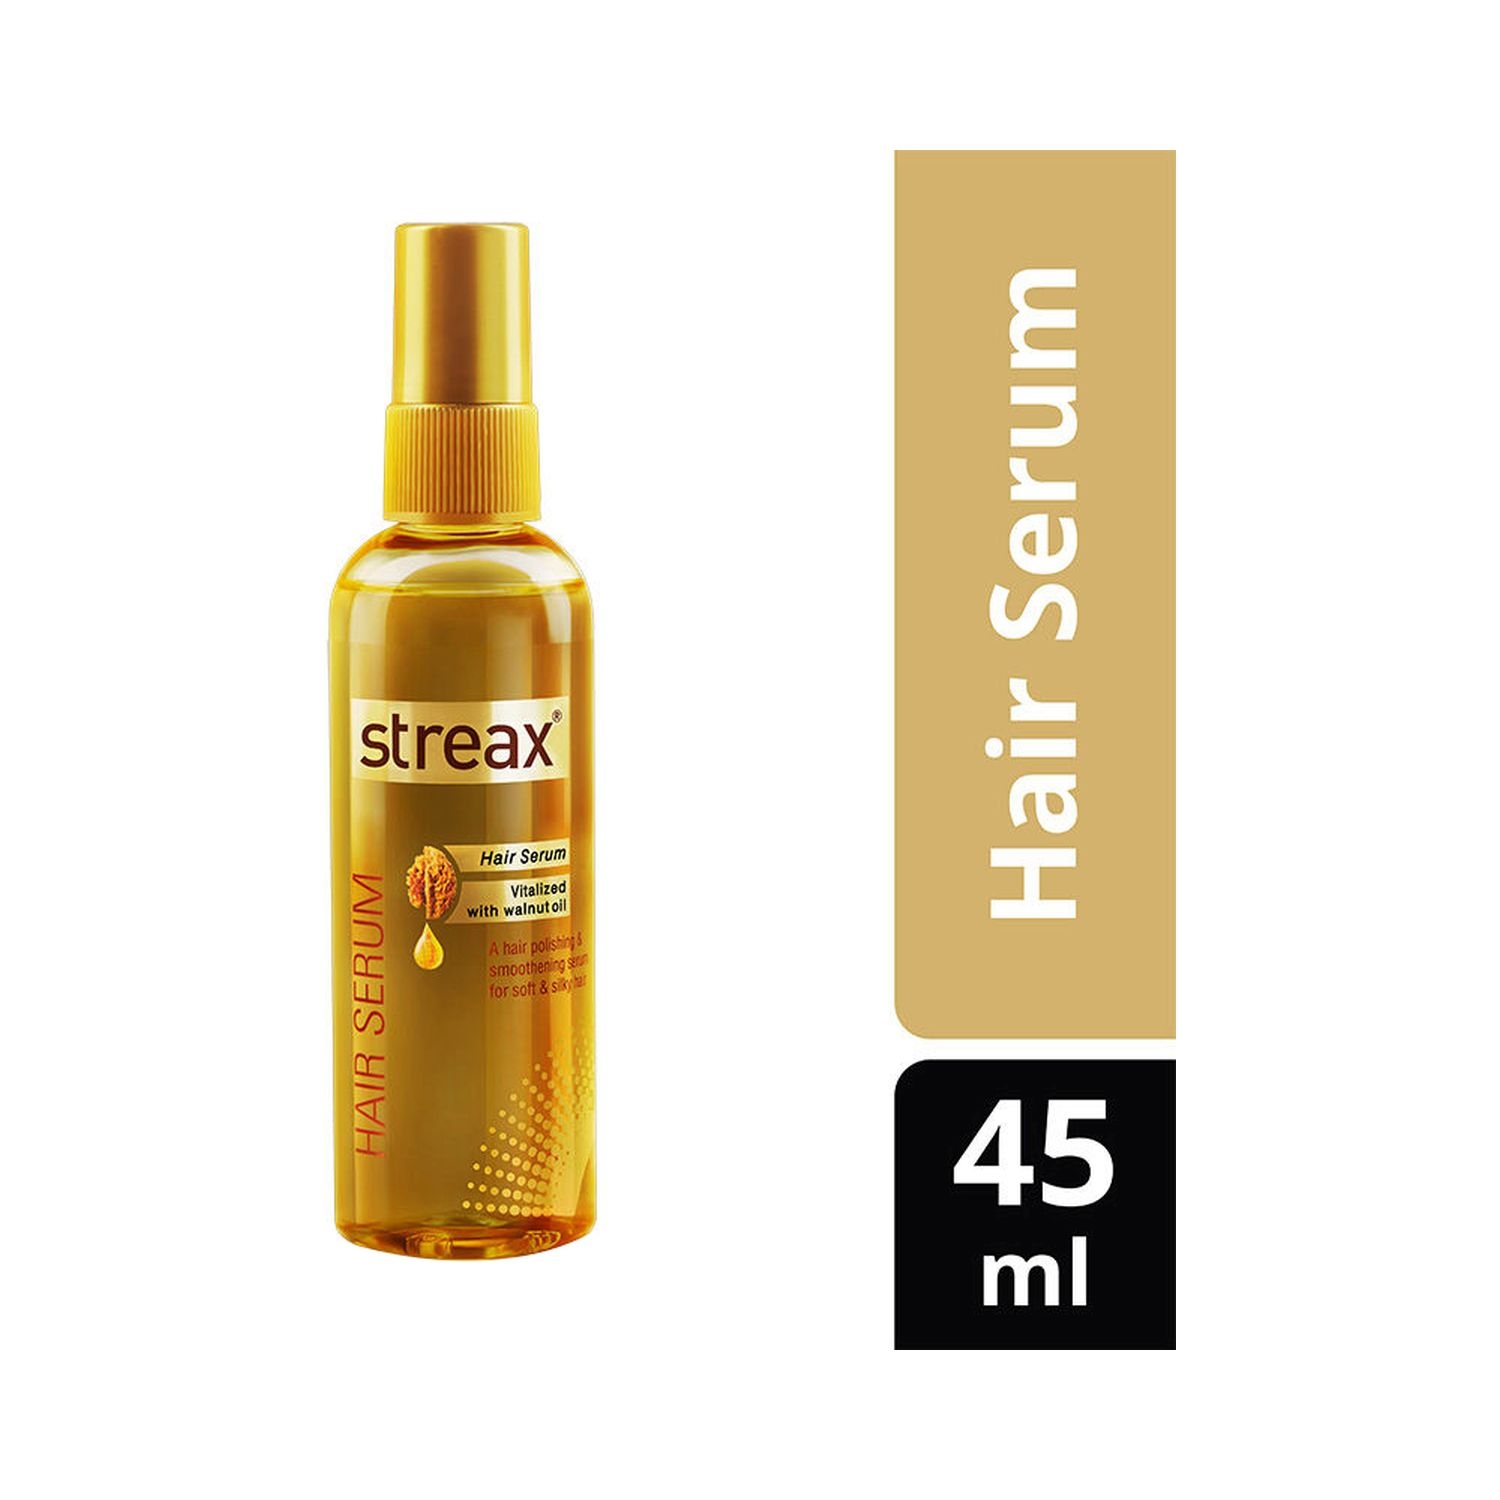 Streax | Streax Hair Serum Vitalised With Walnut Oil (45ml)